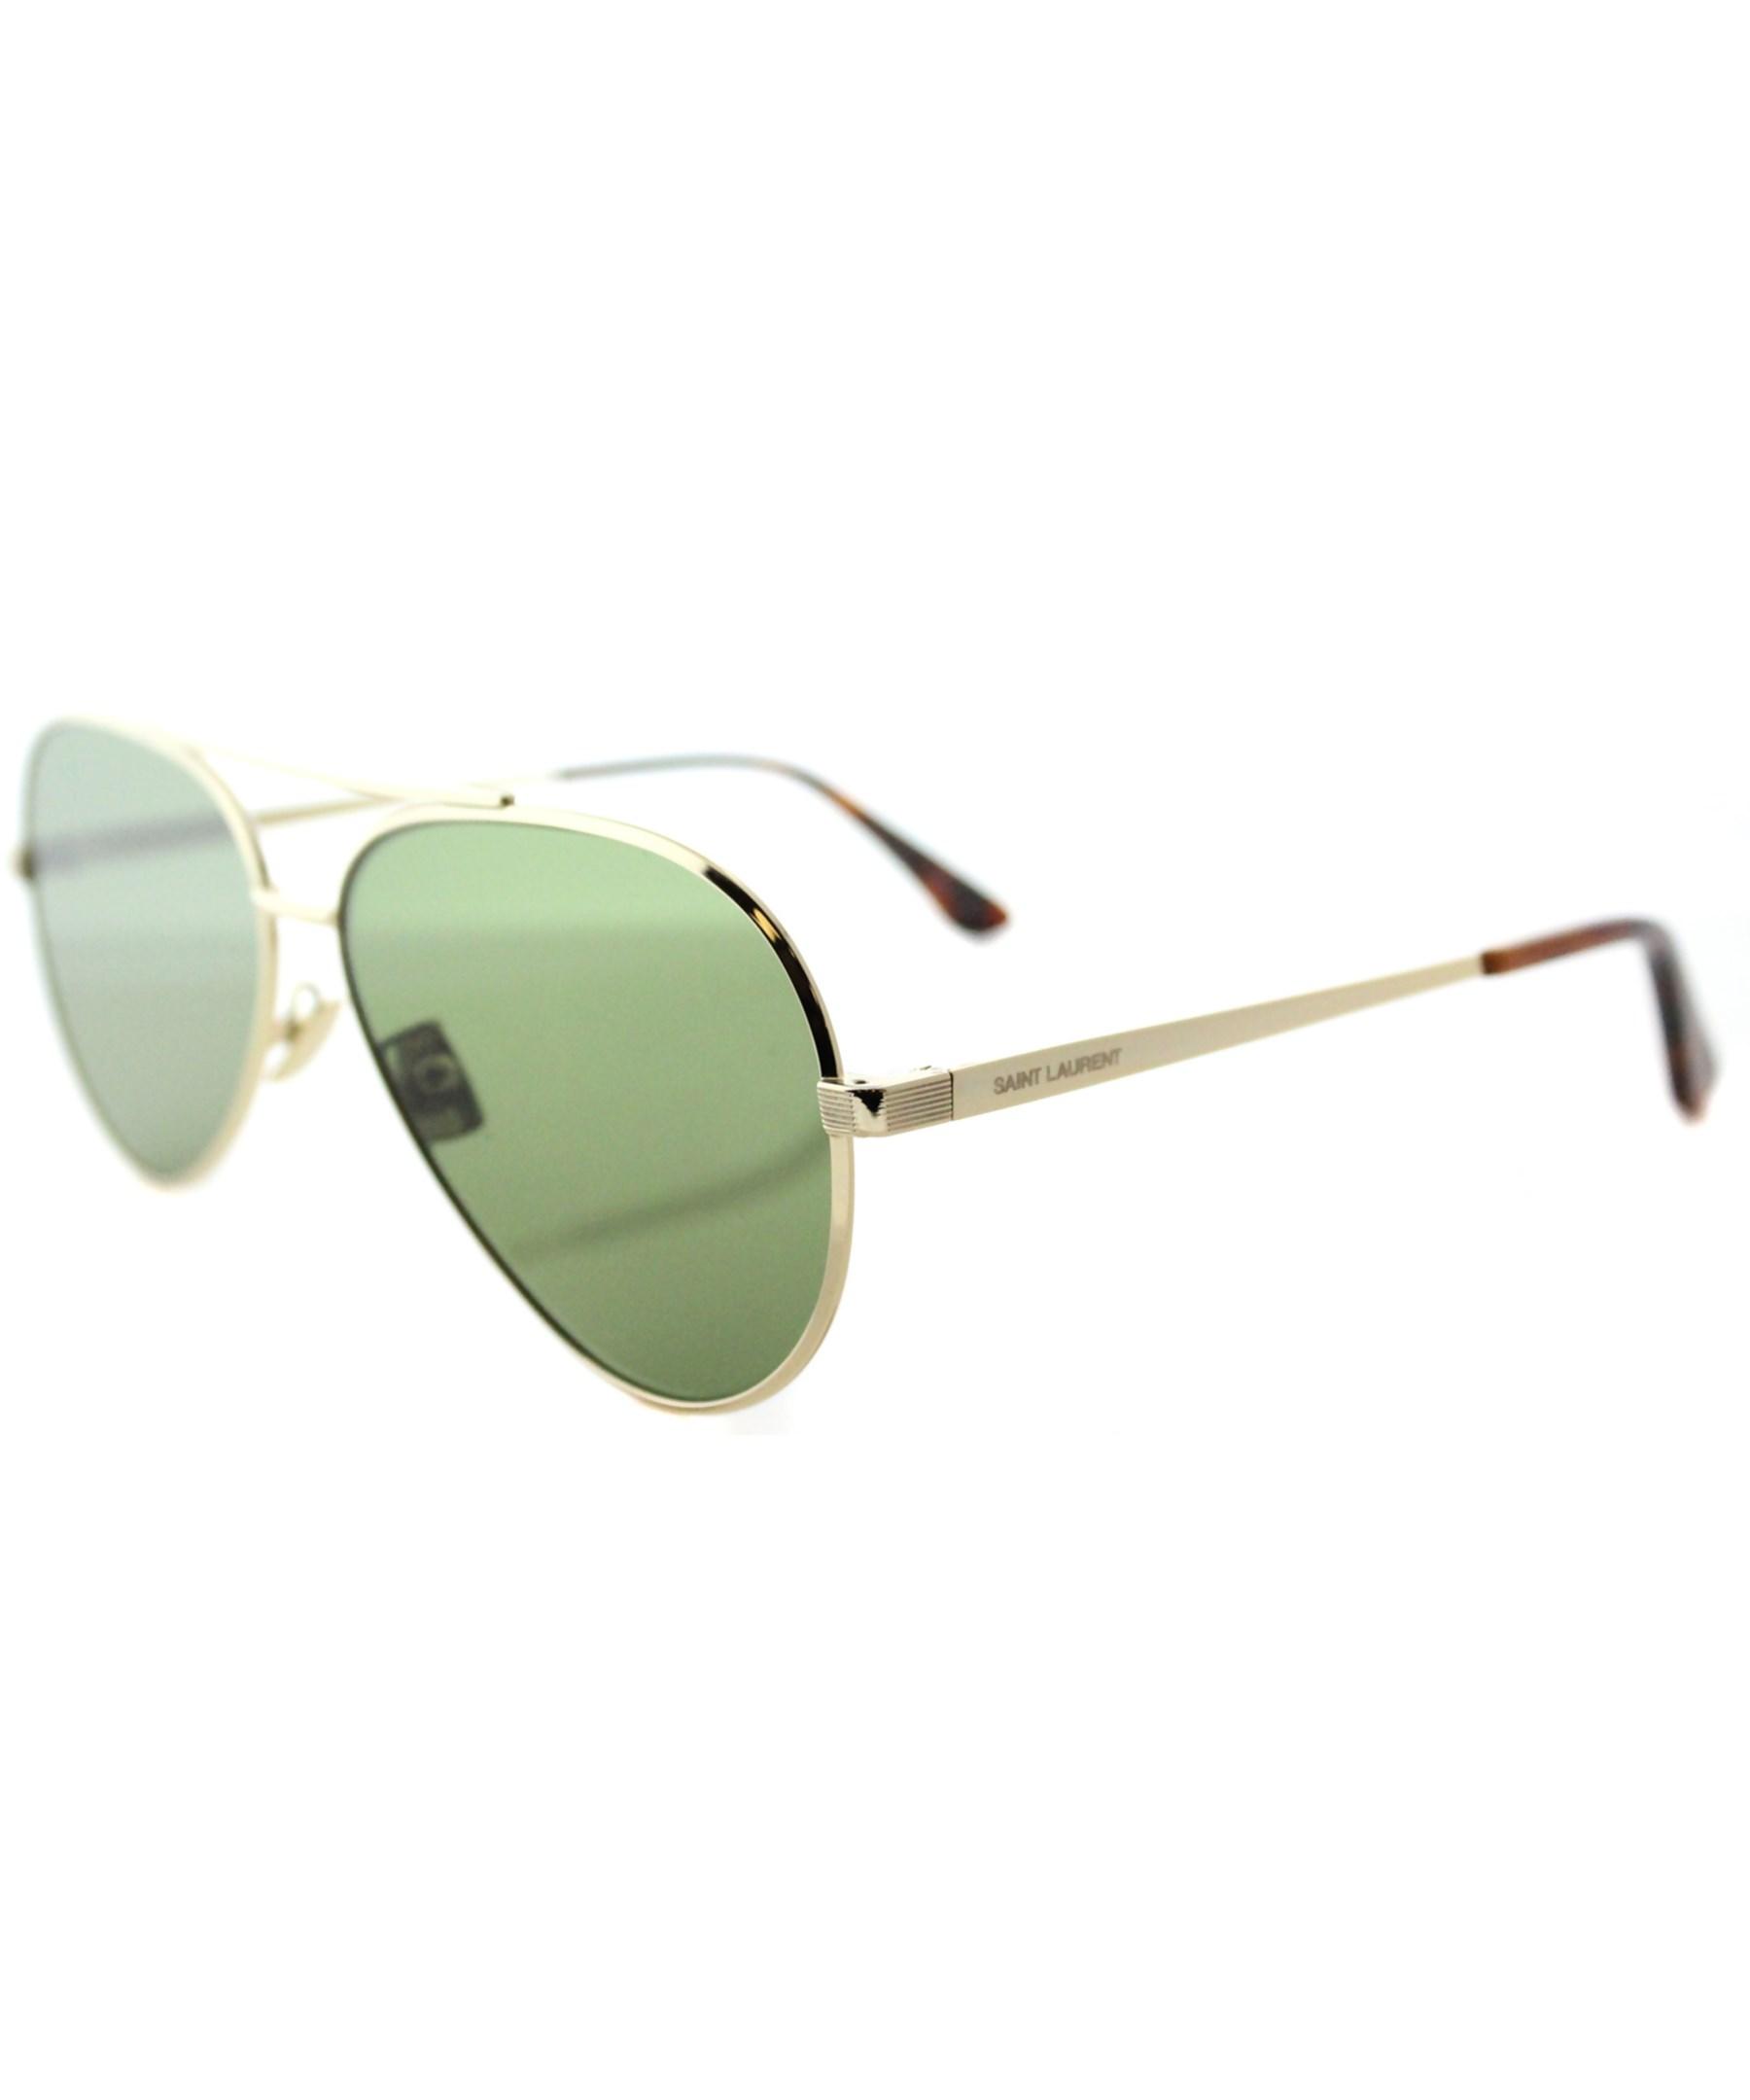 Saint laurent Classic 11 Zero Aviator Metal Sunglasses in Metallic | Lyst